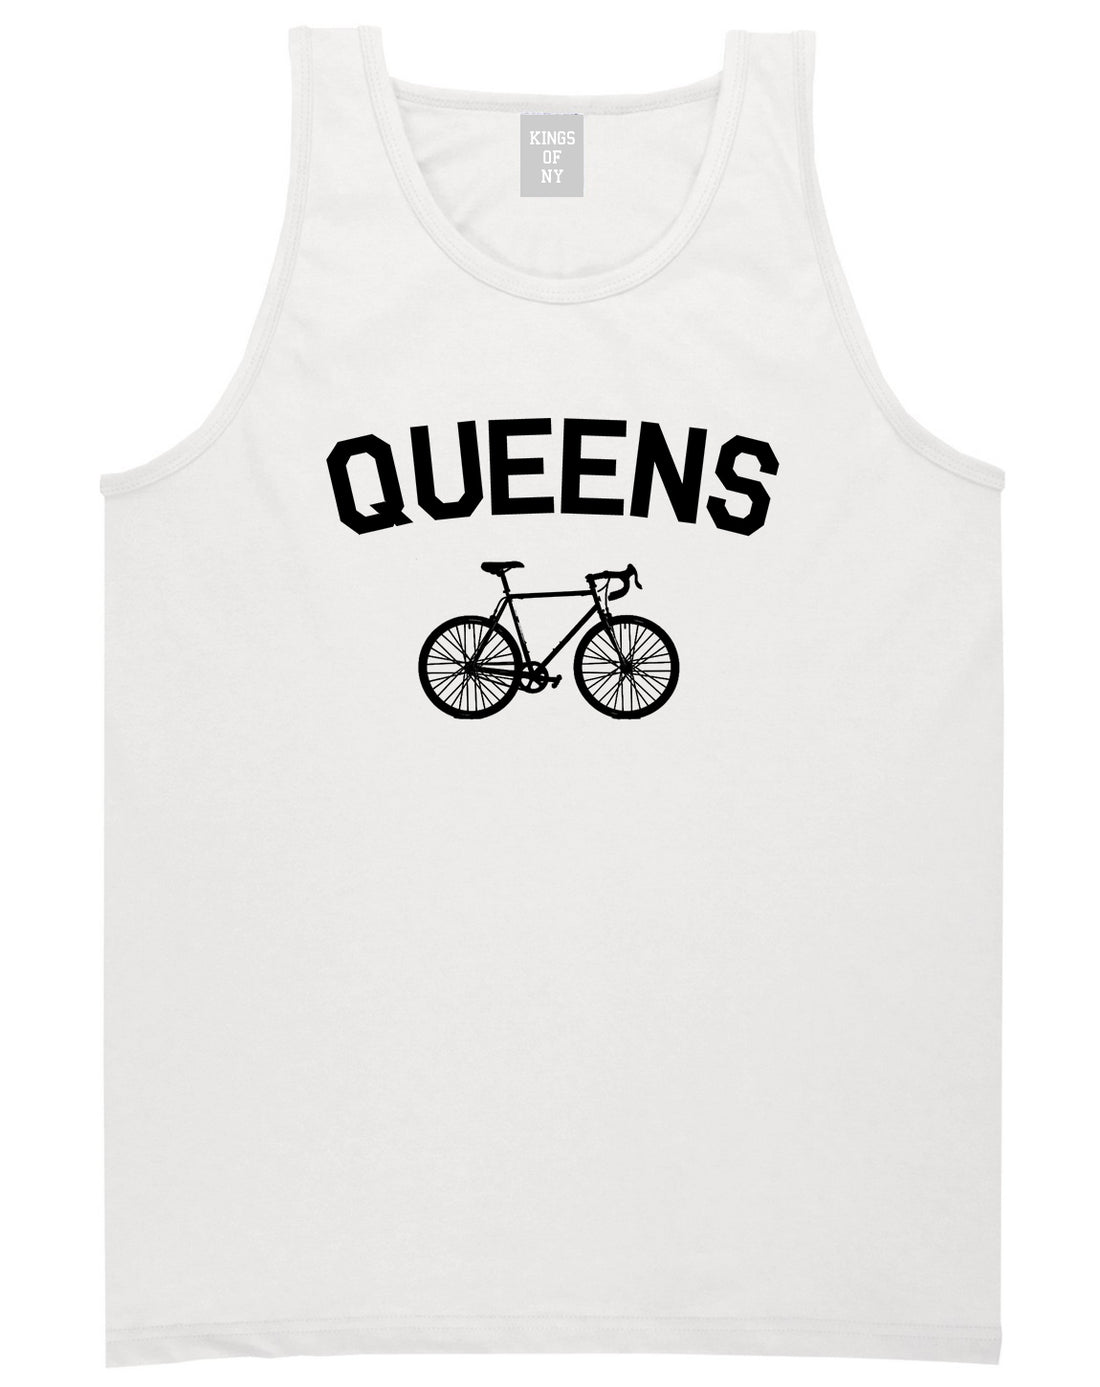 Queens New York Vintage Bike Cycling Mens Tank Top T-Shirt White